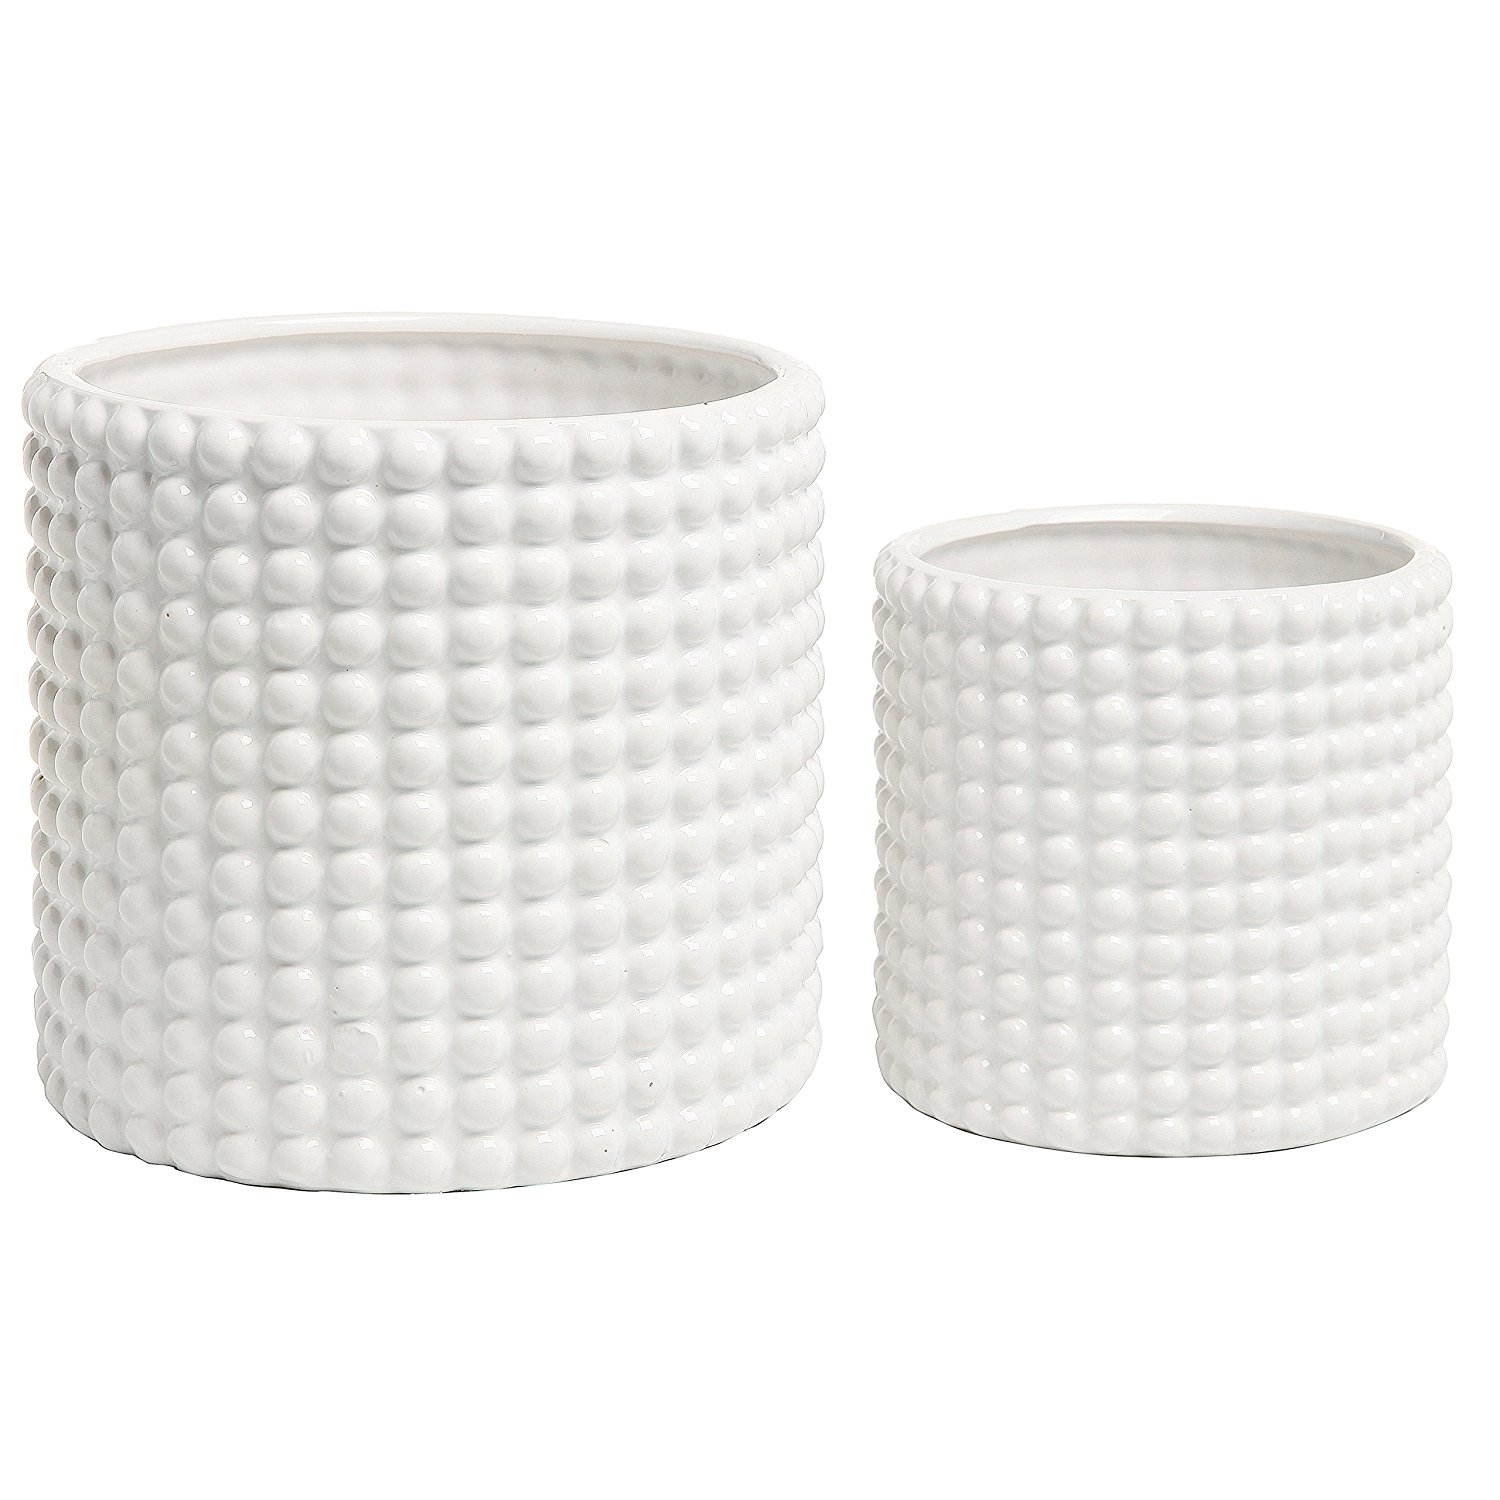 (Set of 2) White Ceramic Vintage-Style Hobnail Textured Flower Planter Pots / Storage Jars